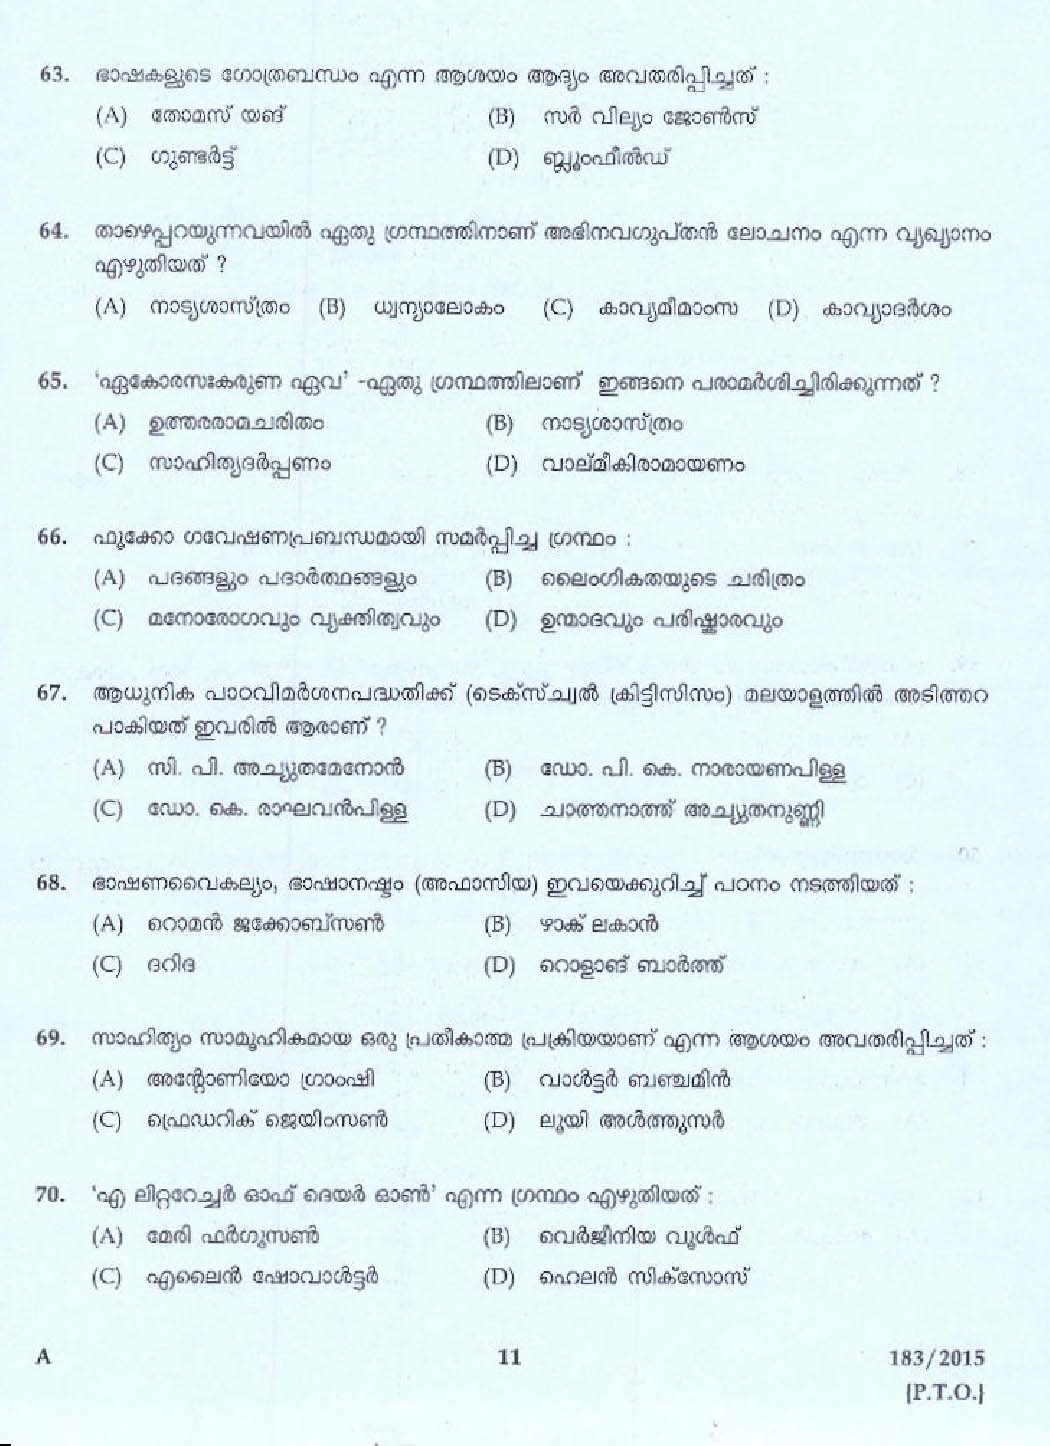 KPSC Lecturer in Malayalam Exam 2015 Code 1832015 9